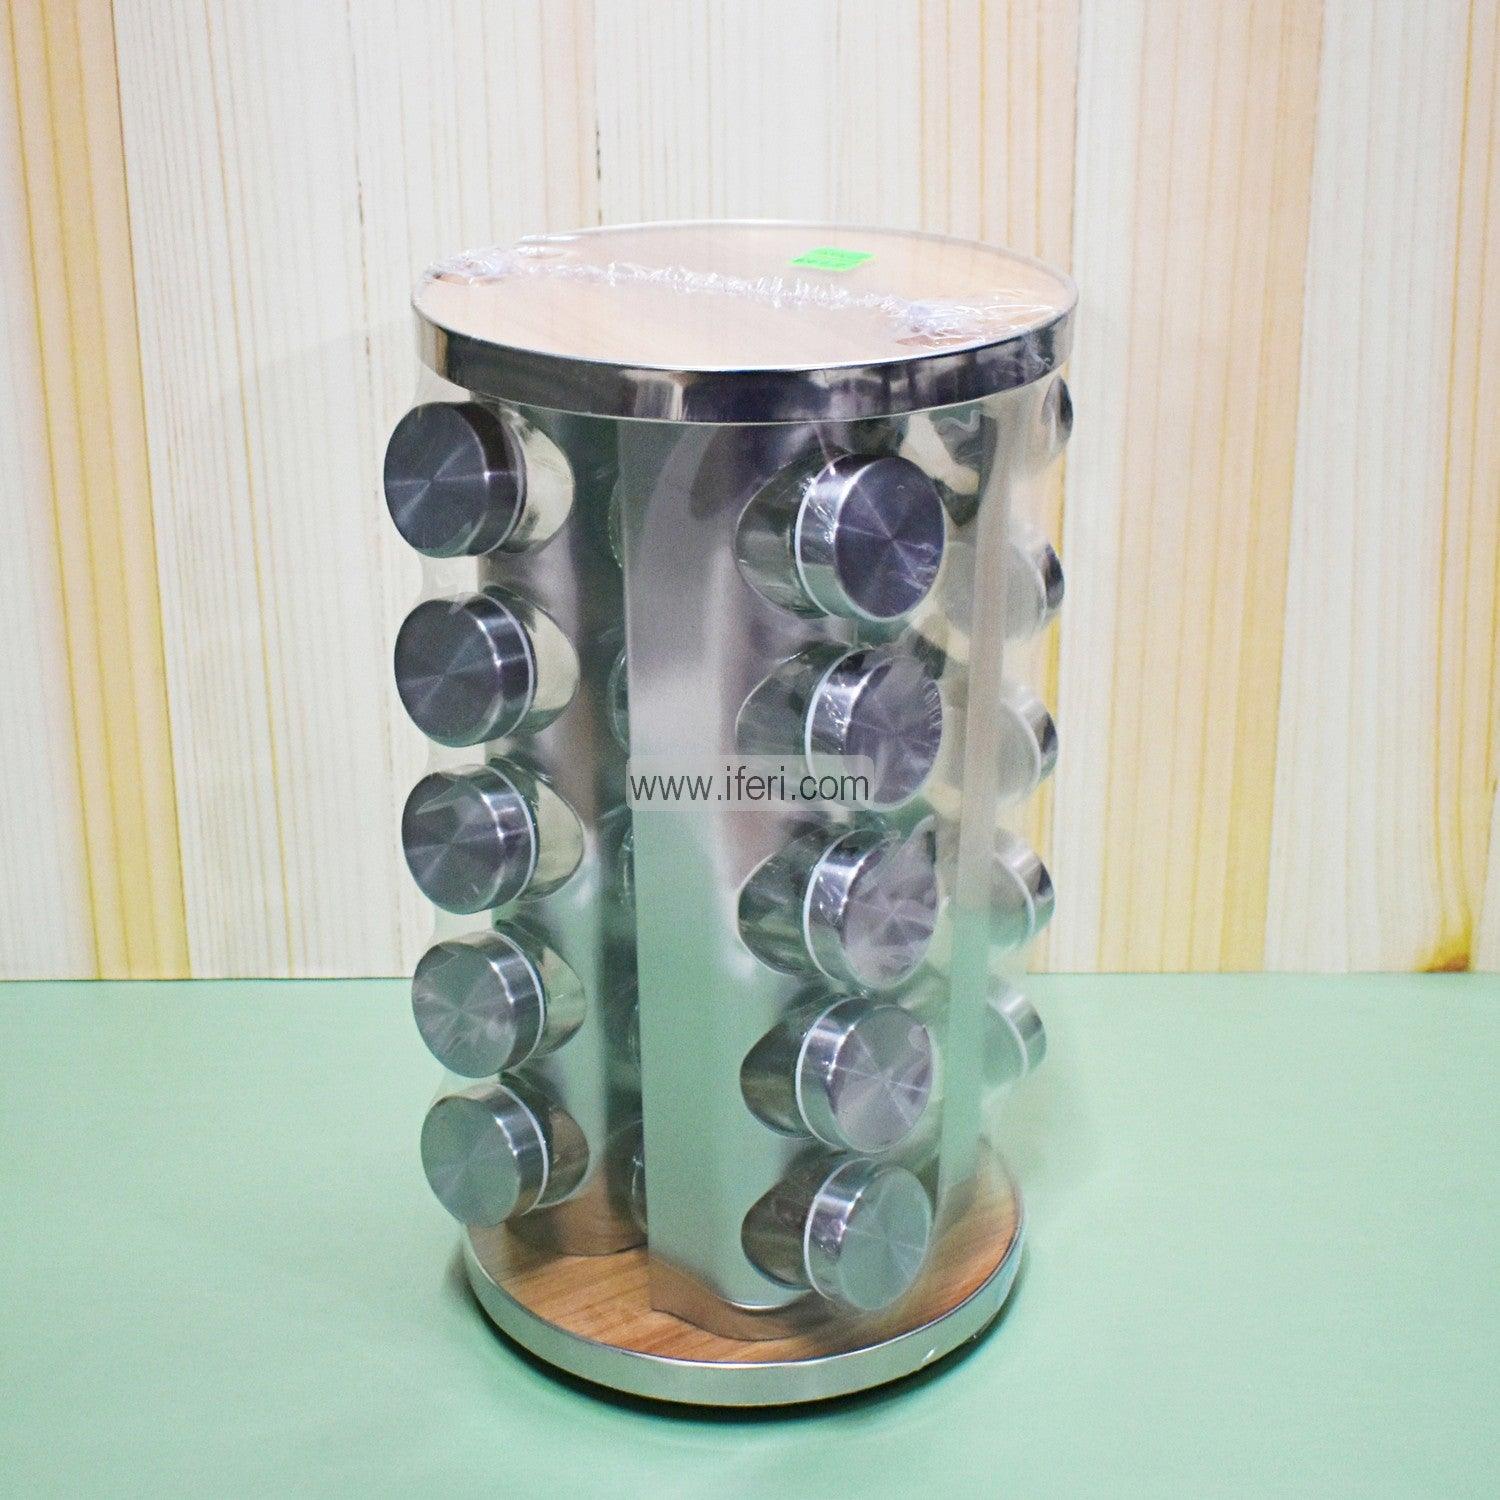 20 Pcs Spice Jar Set with Revolving Stand FH0765 Price in Bangladesh - iferi.com